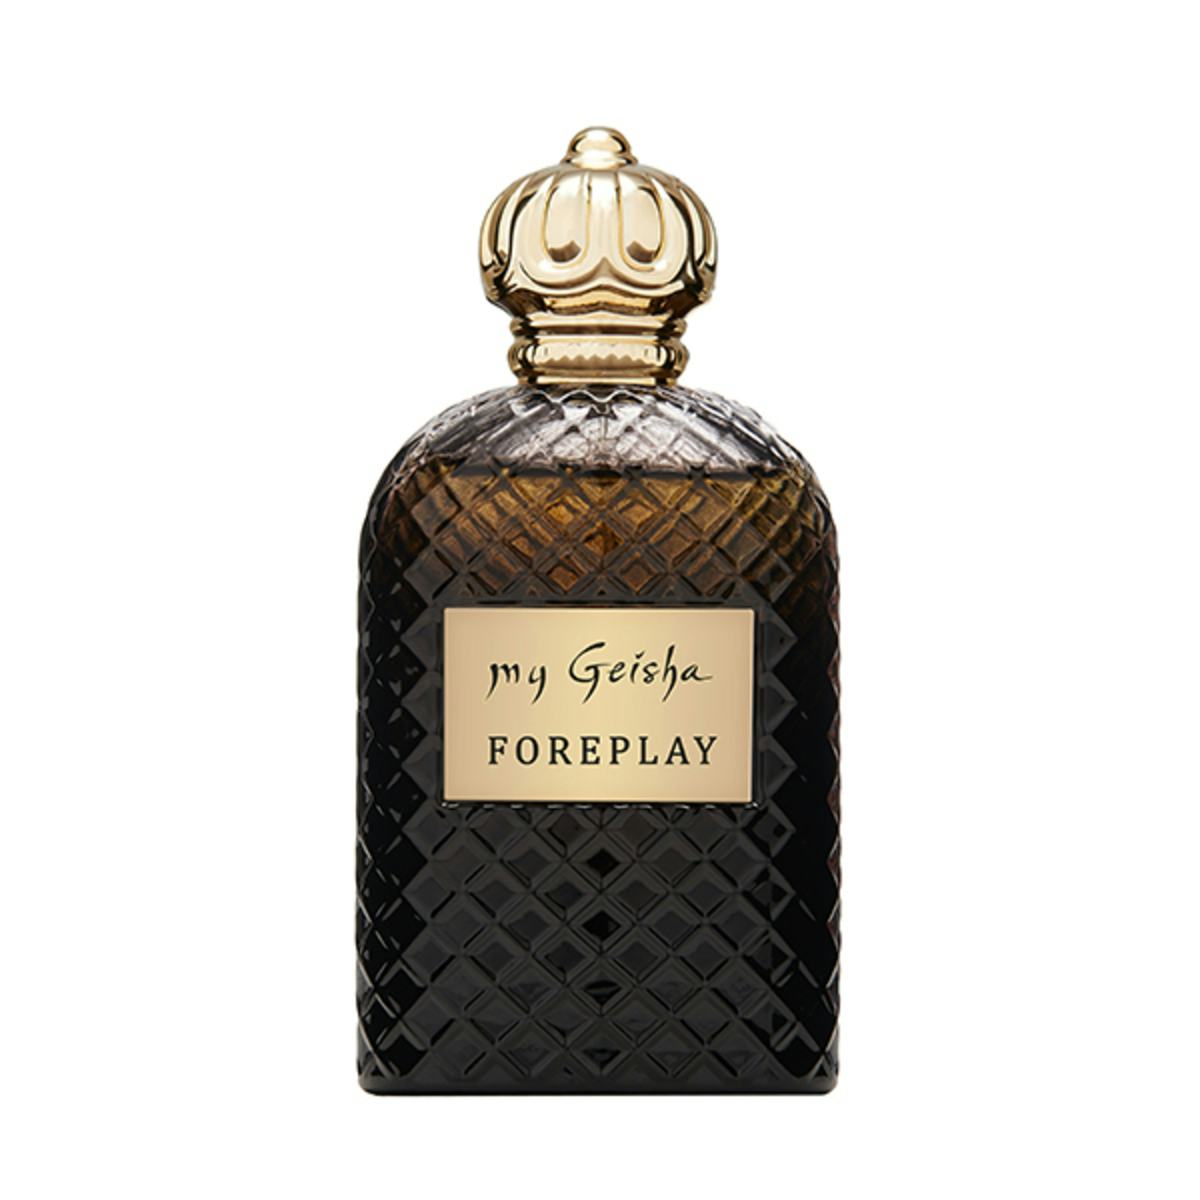 Perfume extract "Foreplay" 100 ml, My Geisha Genève, Genève, image 1 | Mimelis